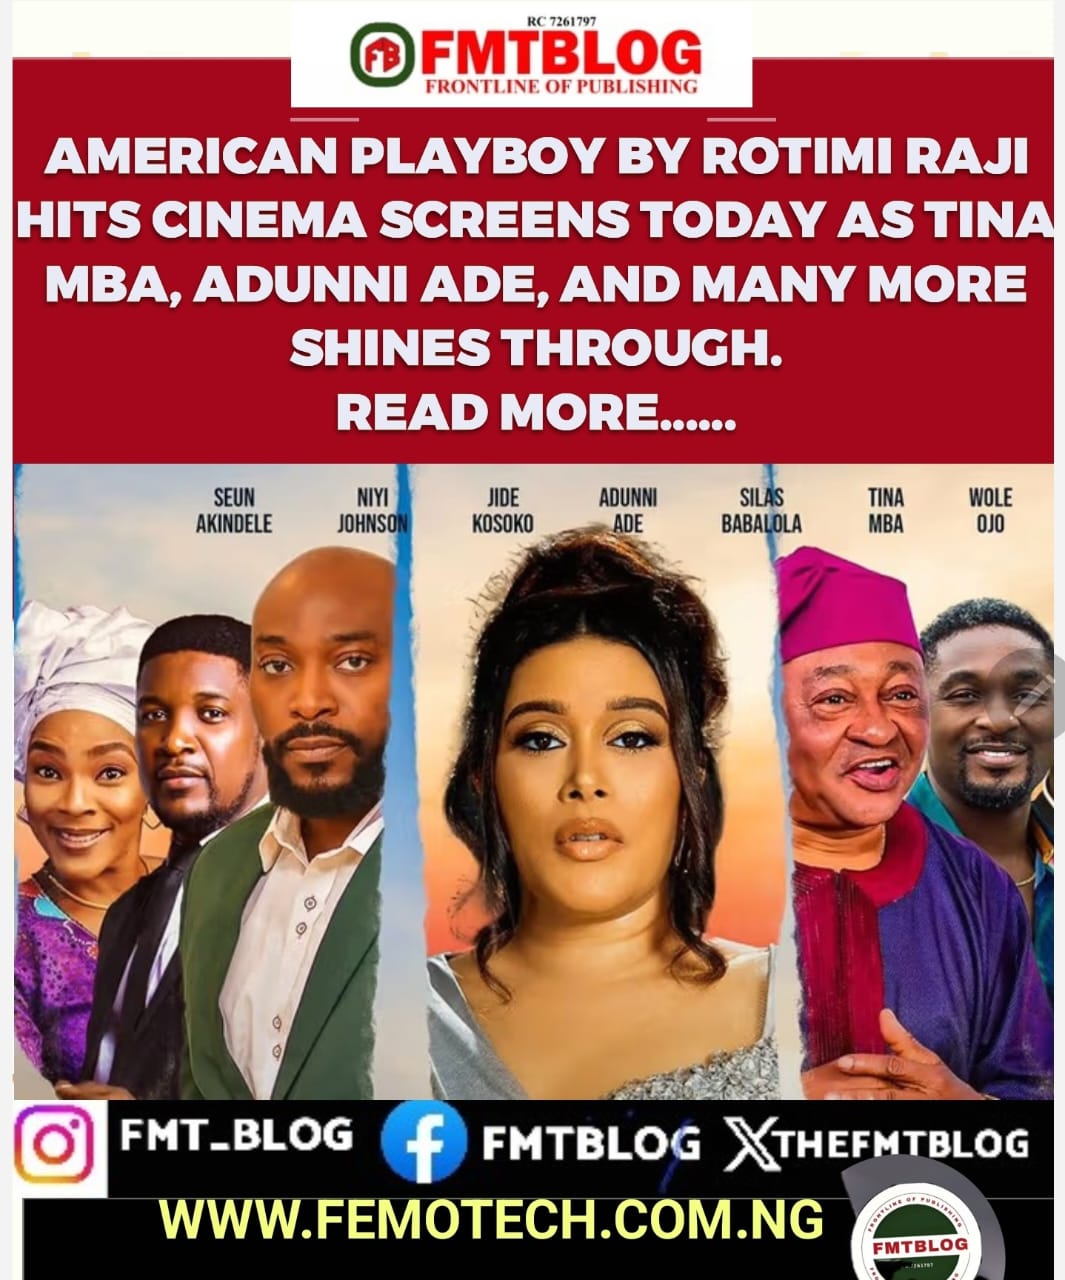 American Playboy By Rotimi Raji Hits Cinema Screens Today As Tina Mba, Adunni Ade, And Many More Shine Through